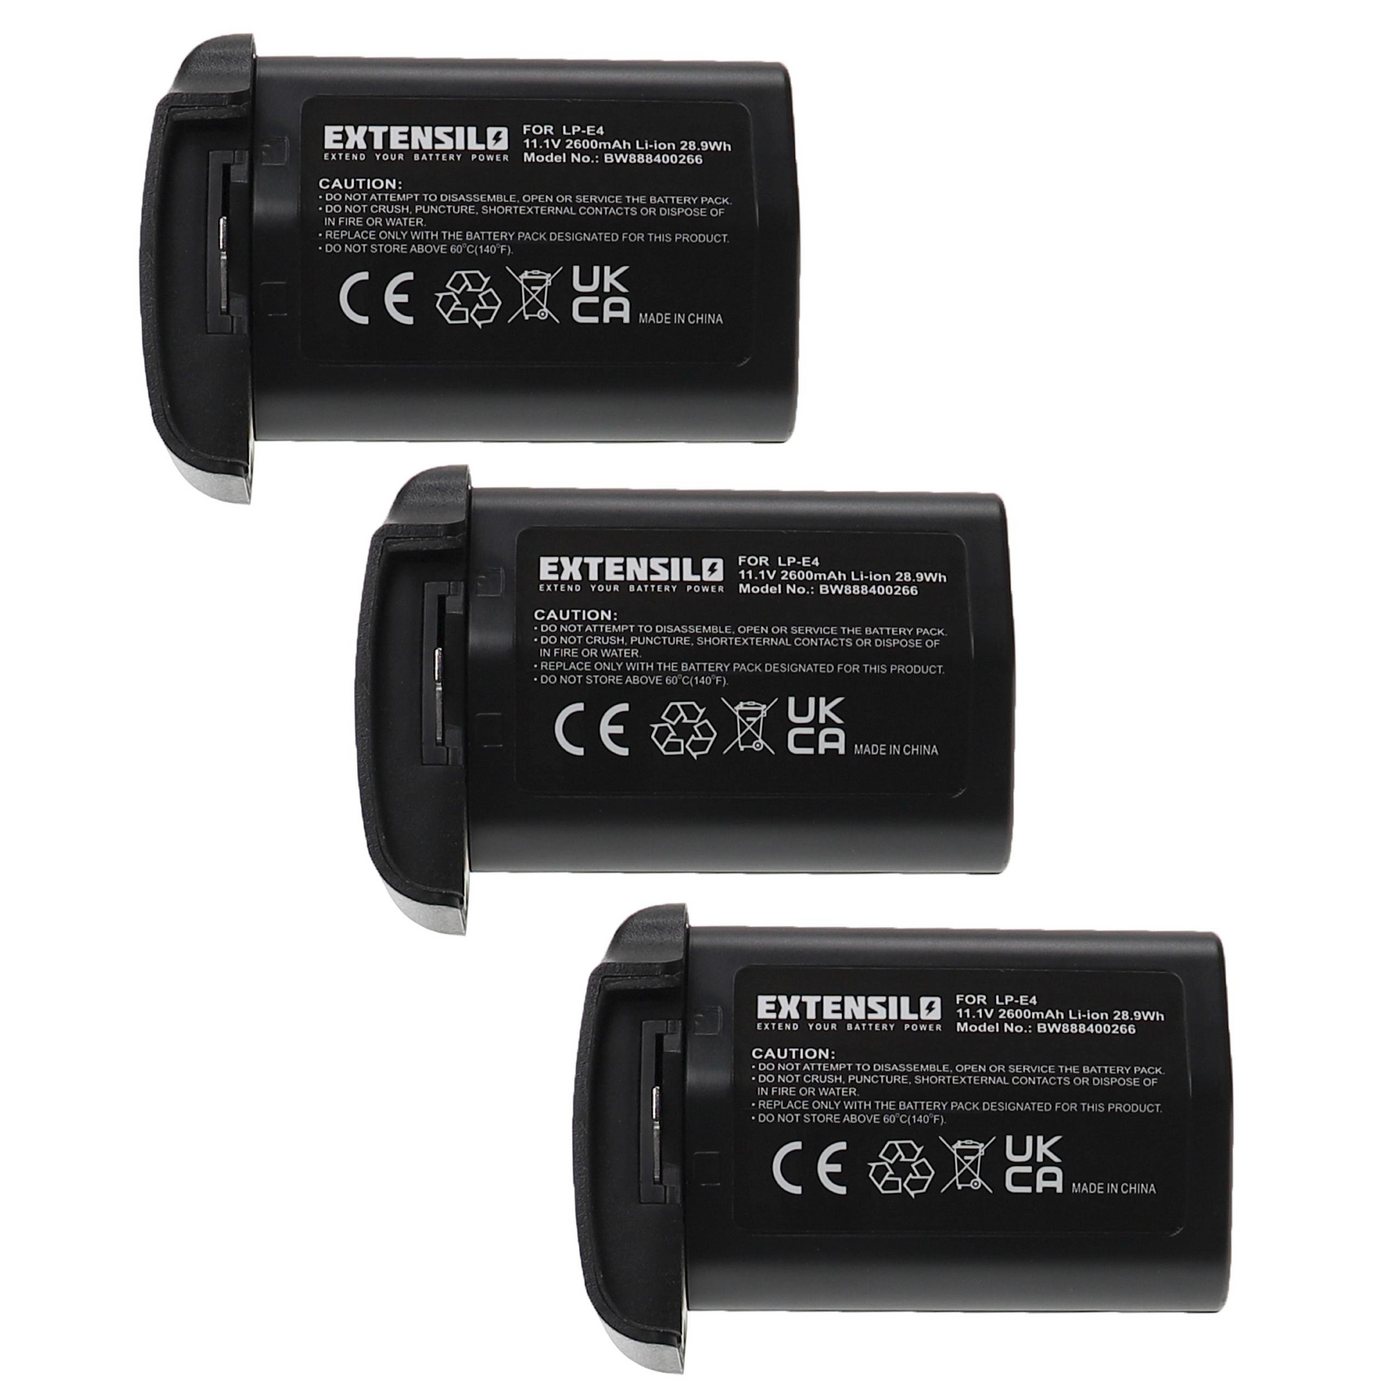 Extensilo Ersatz für Canon LP-E4N, LP-E4 für Kamera-Akku Li-Ion 2600 mAh (11,1 V) von Extensilo